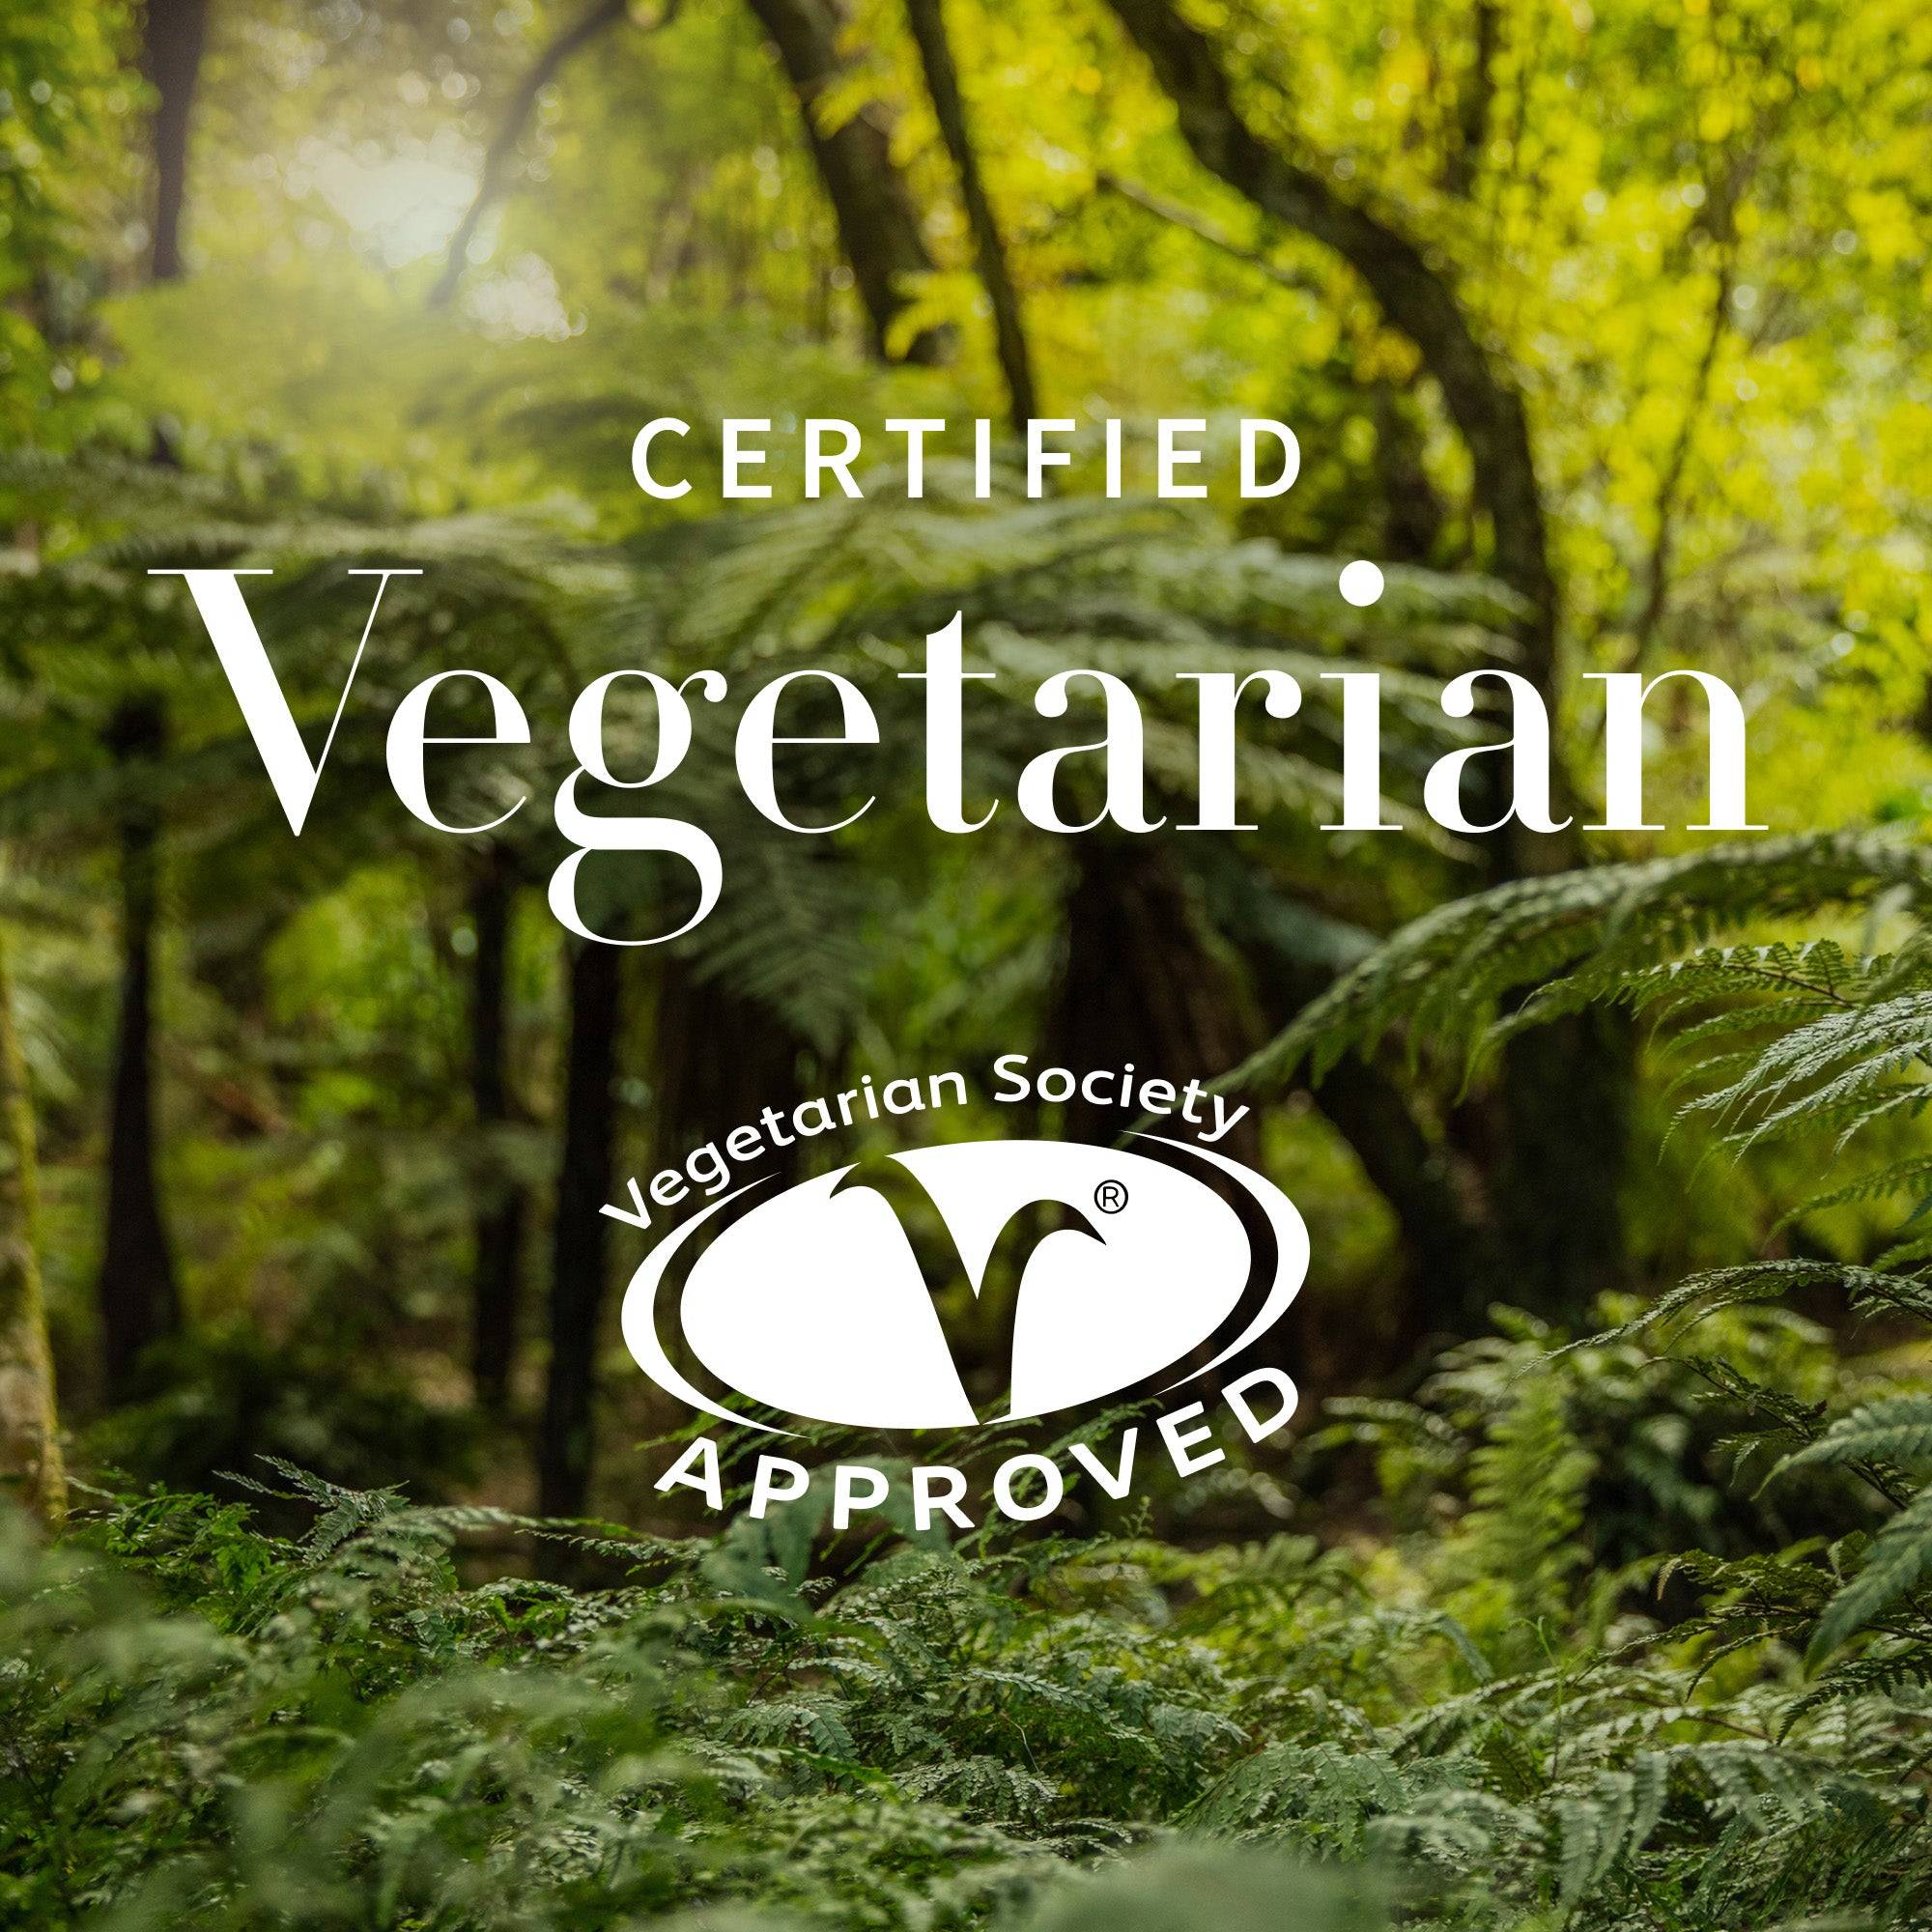 Certified vegetarian